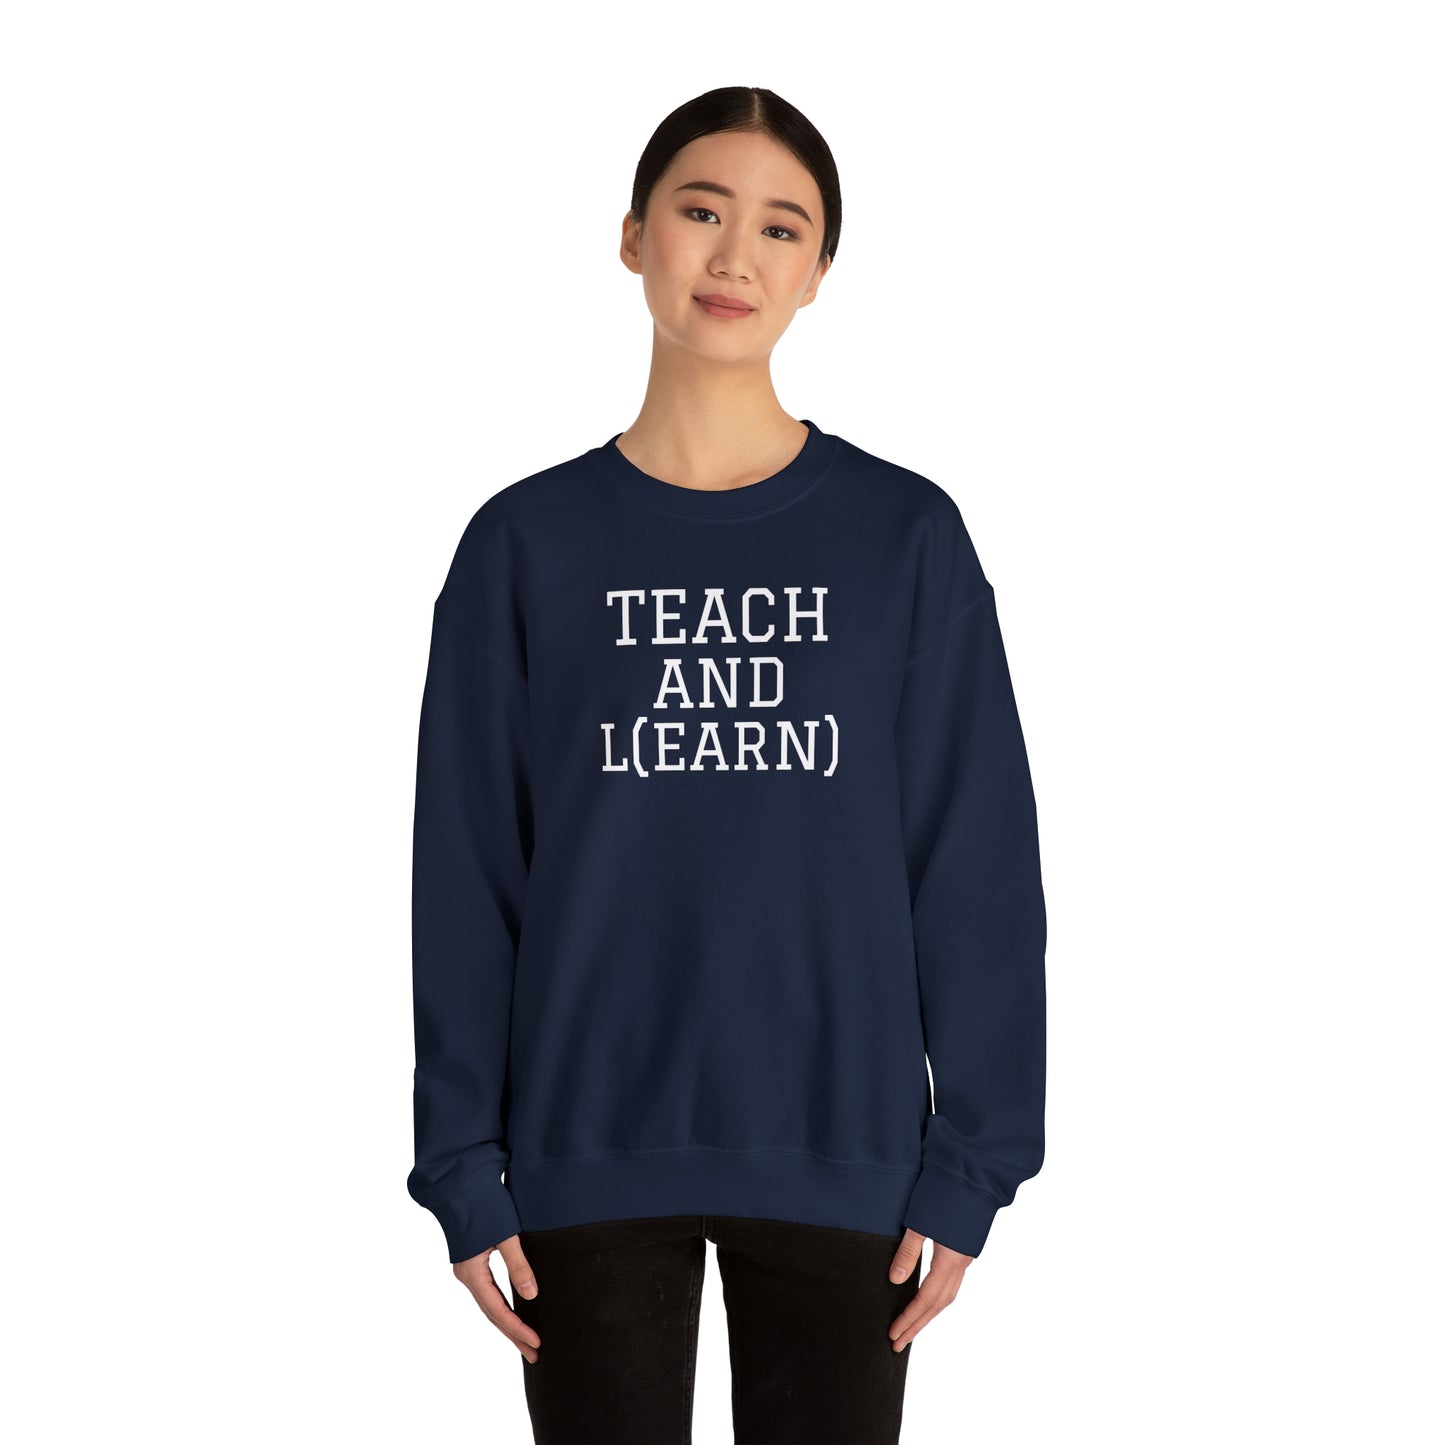 TEACH AND L(EARN) Sweatshirt